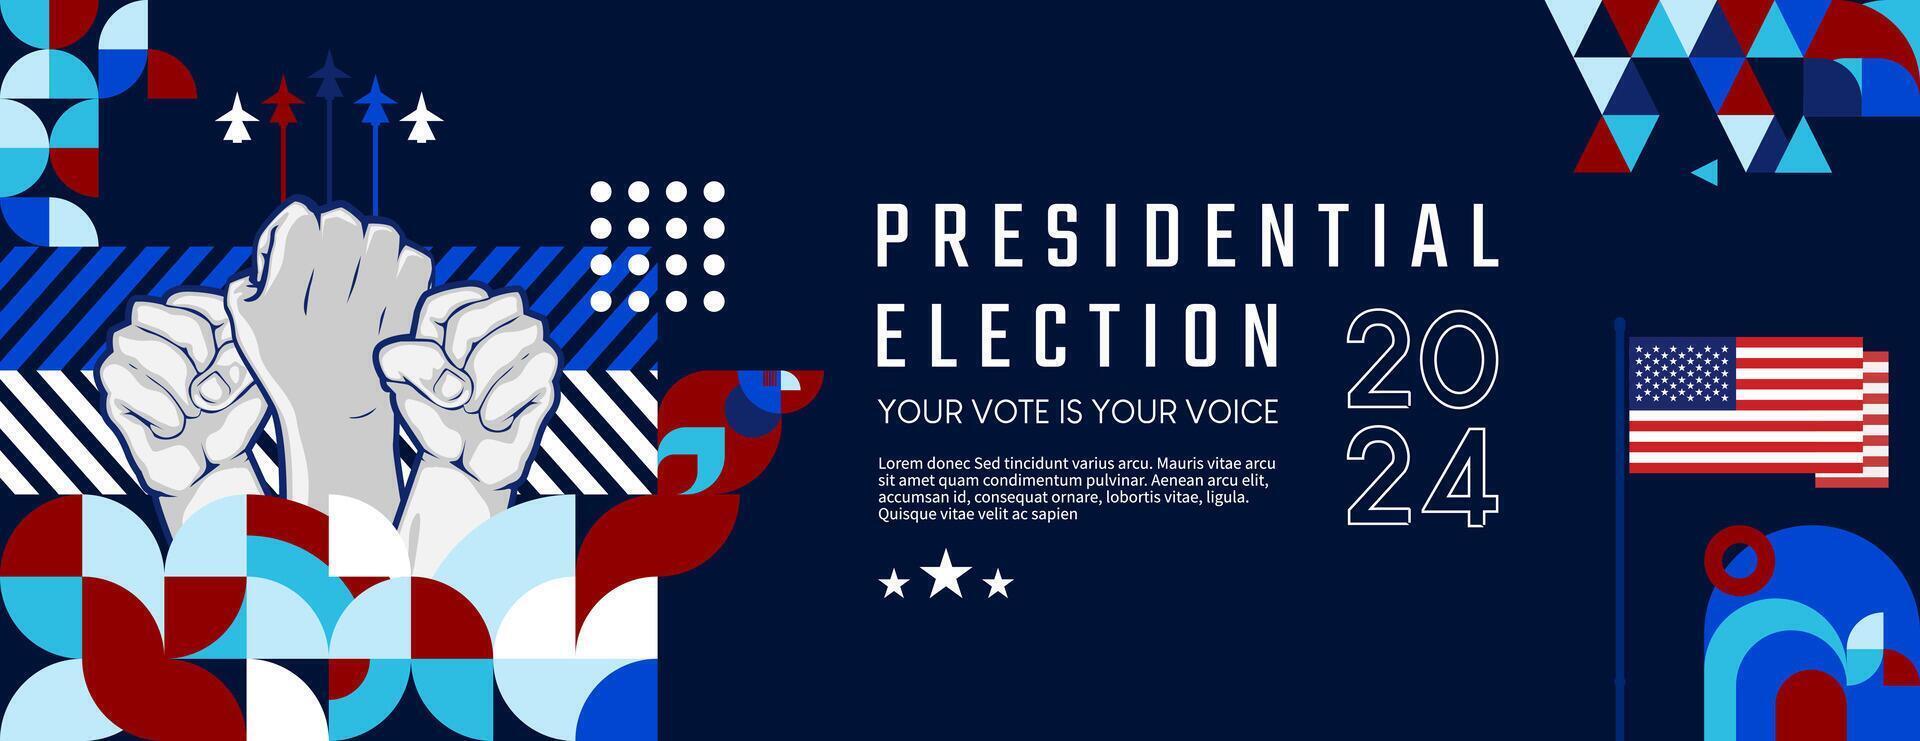 Verenigde staten 2024 presidentieel verkiezing dag banier in modern meetkundig stijl. Amerikaans verkiezing stemmen campagne omslag. achtergrond vector illustratie